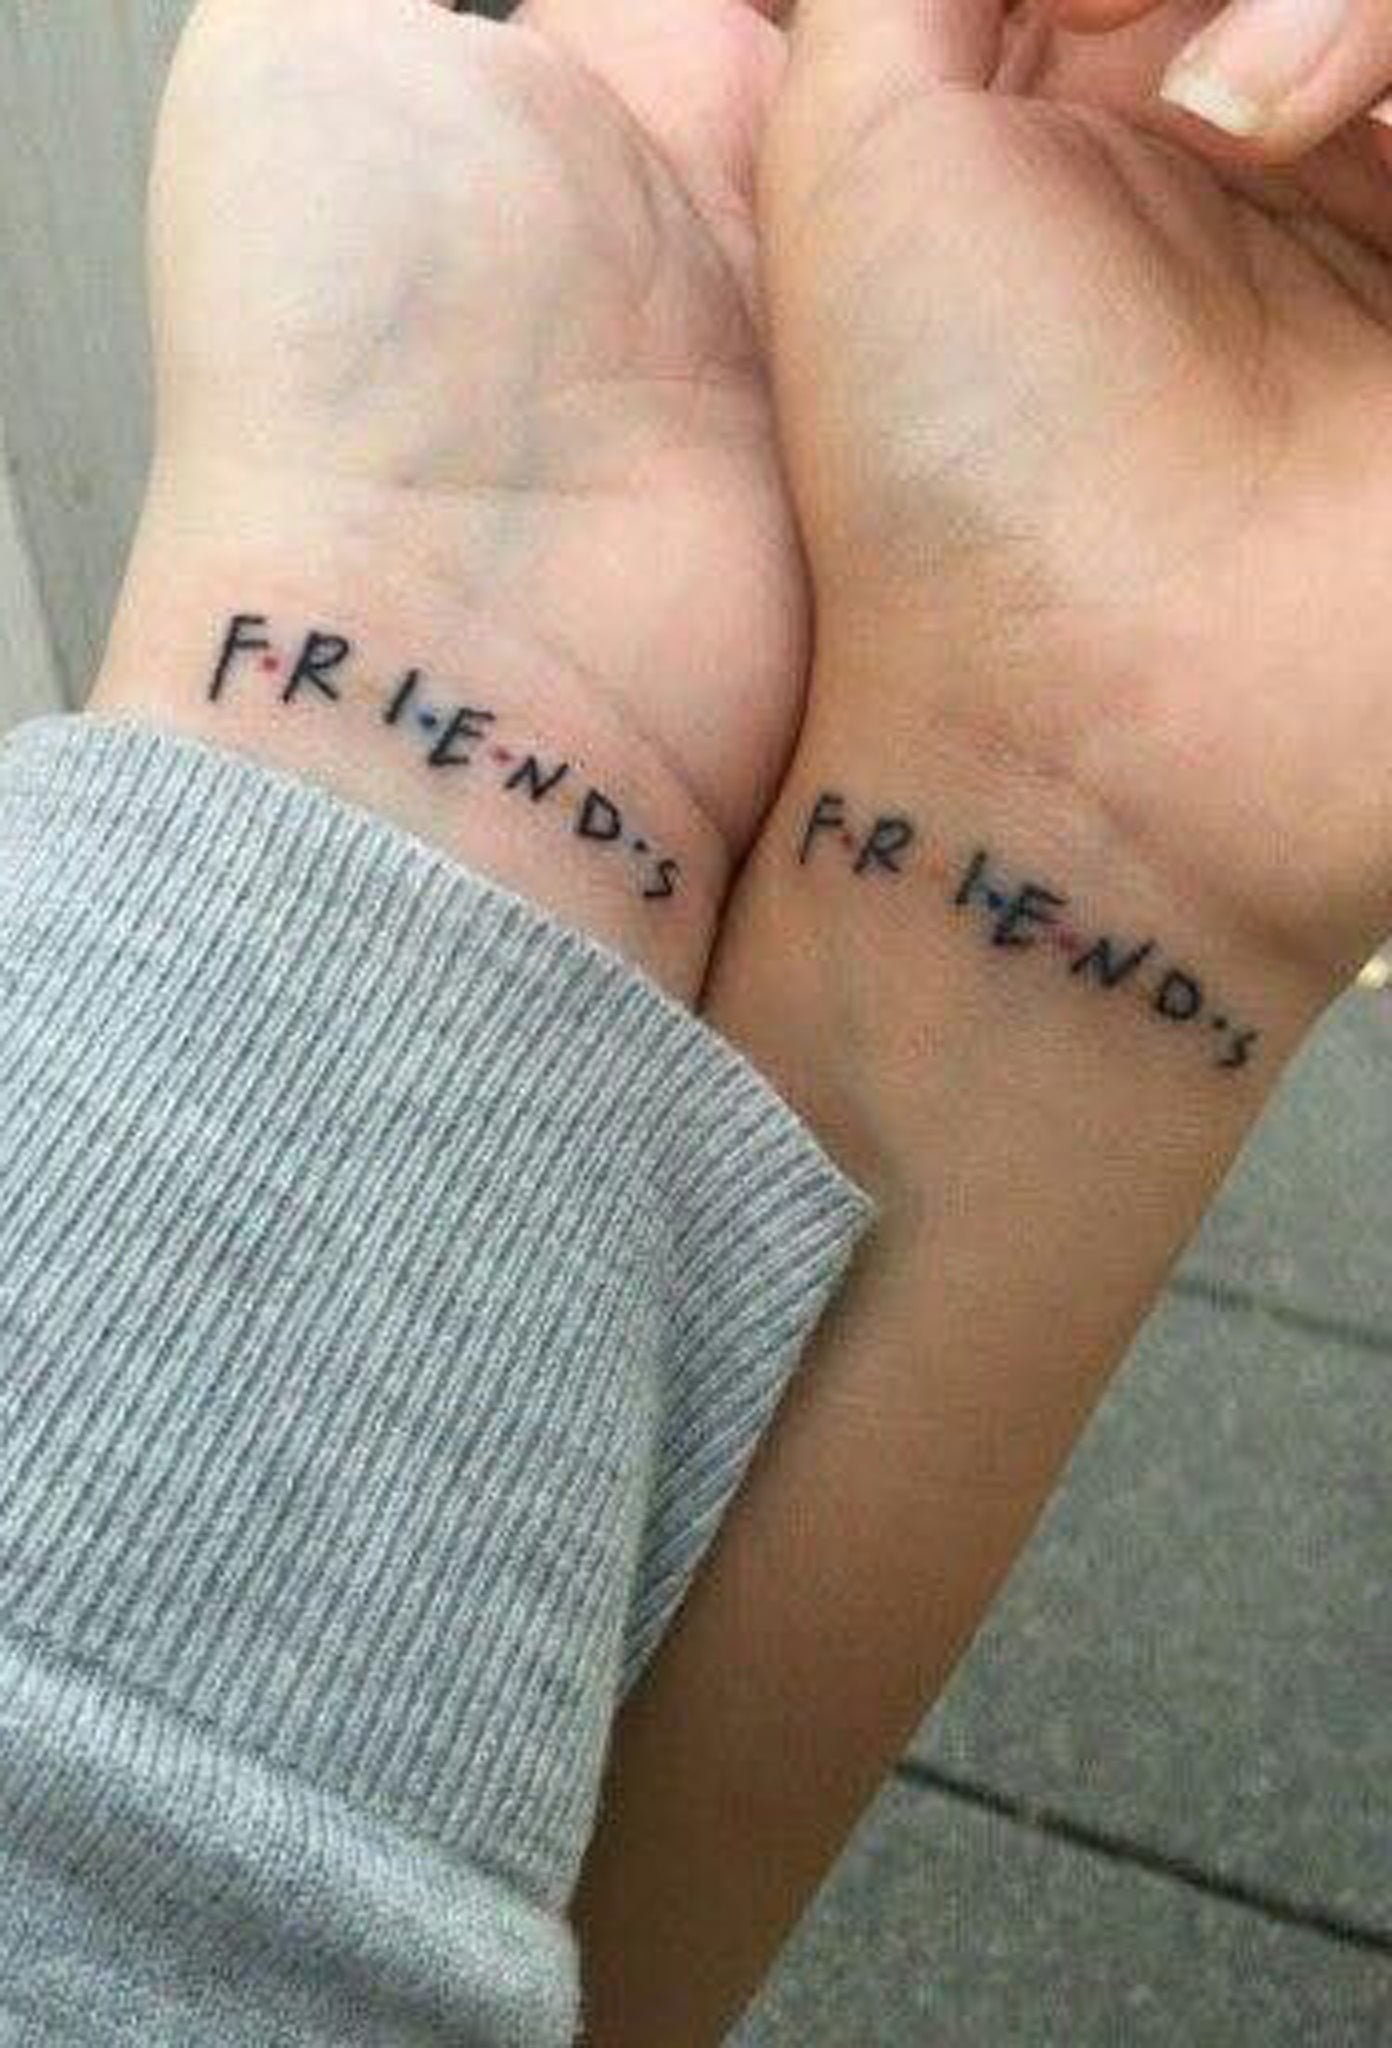 Today my friend and I got a FRIENDS themed friendship tattoo  rhowyoudoin